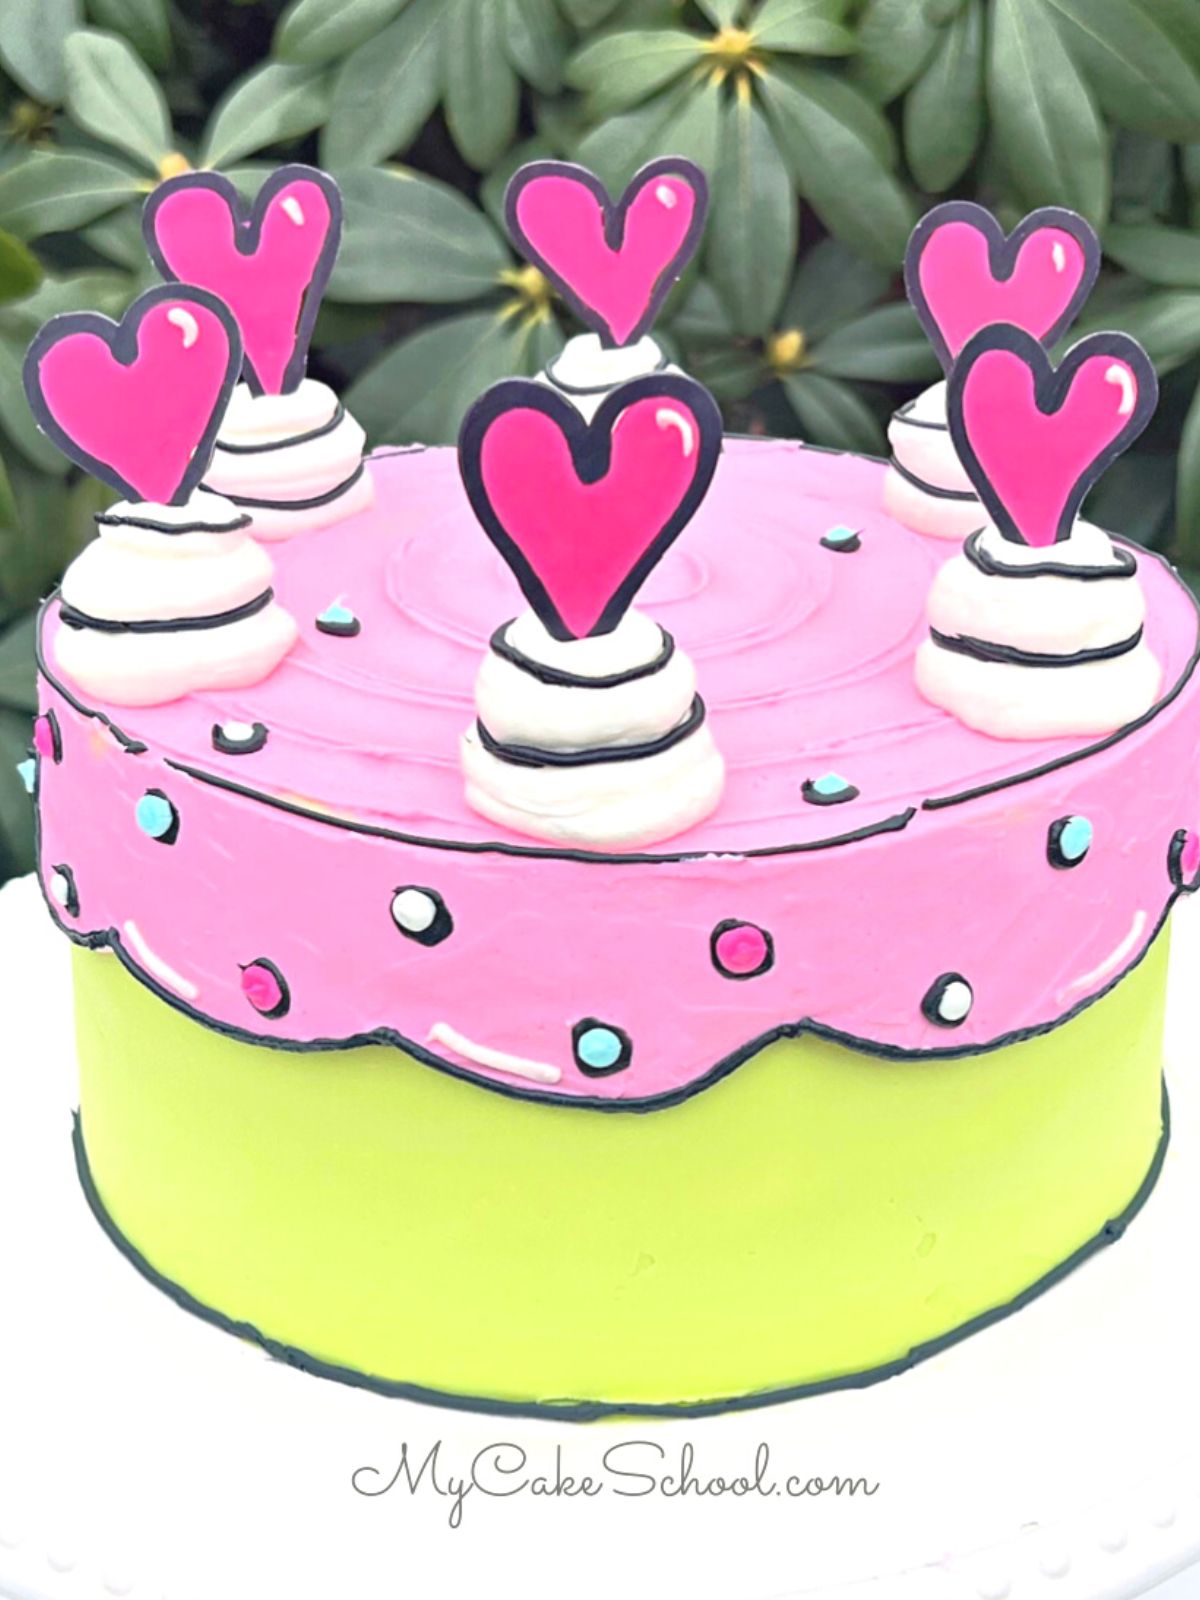 Blackpink Cake - 1118  Creative birthday cakes, Pretty birthday cakes, Cake